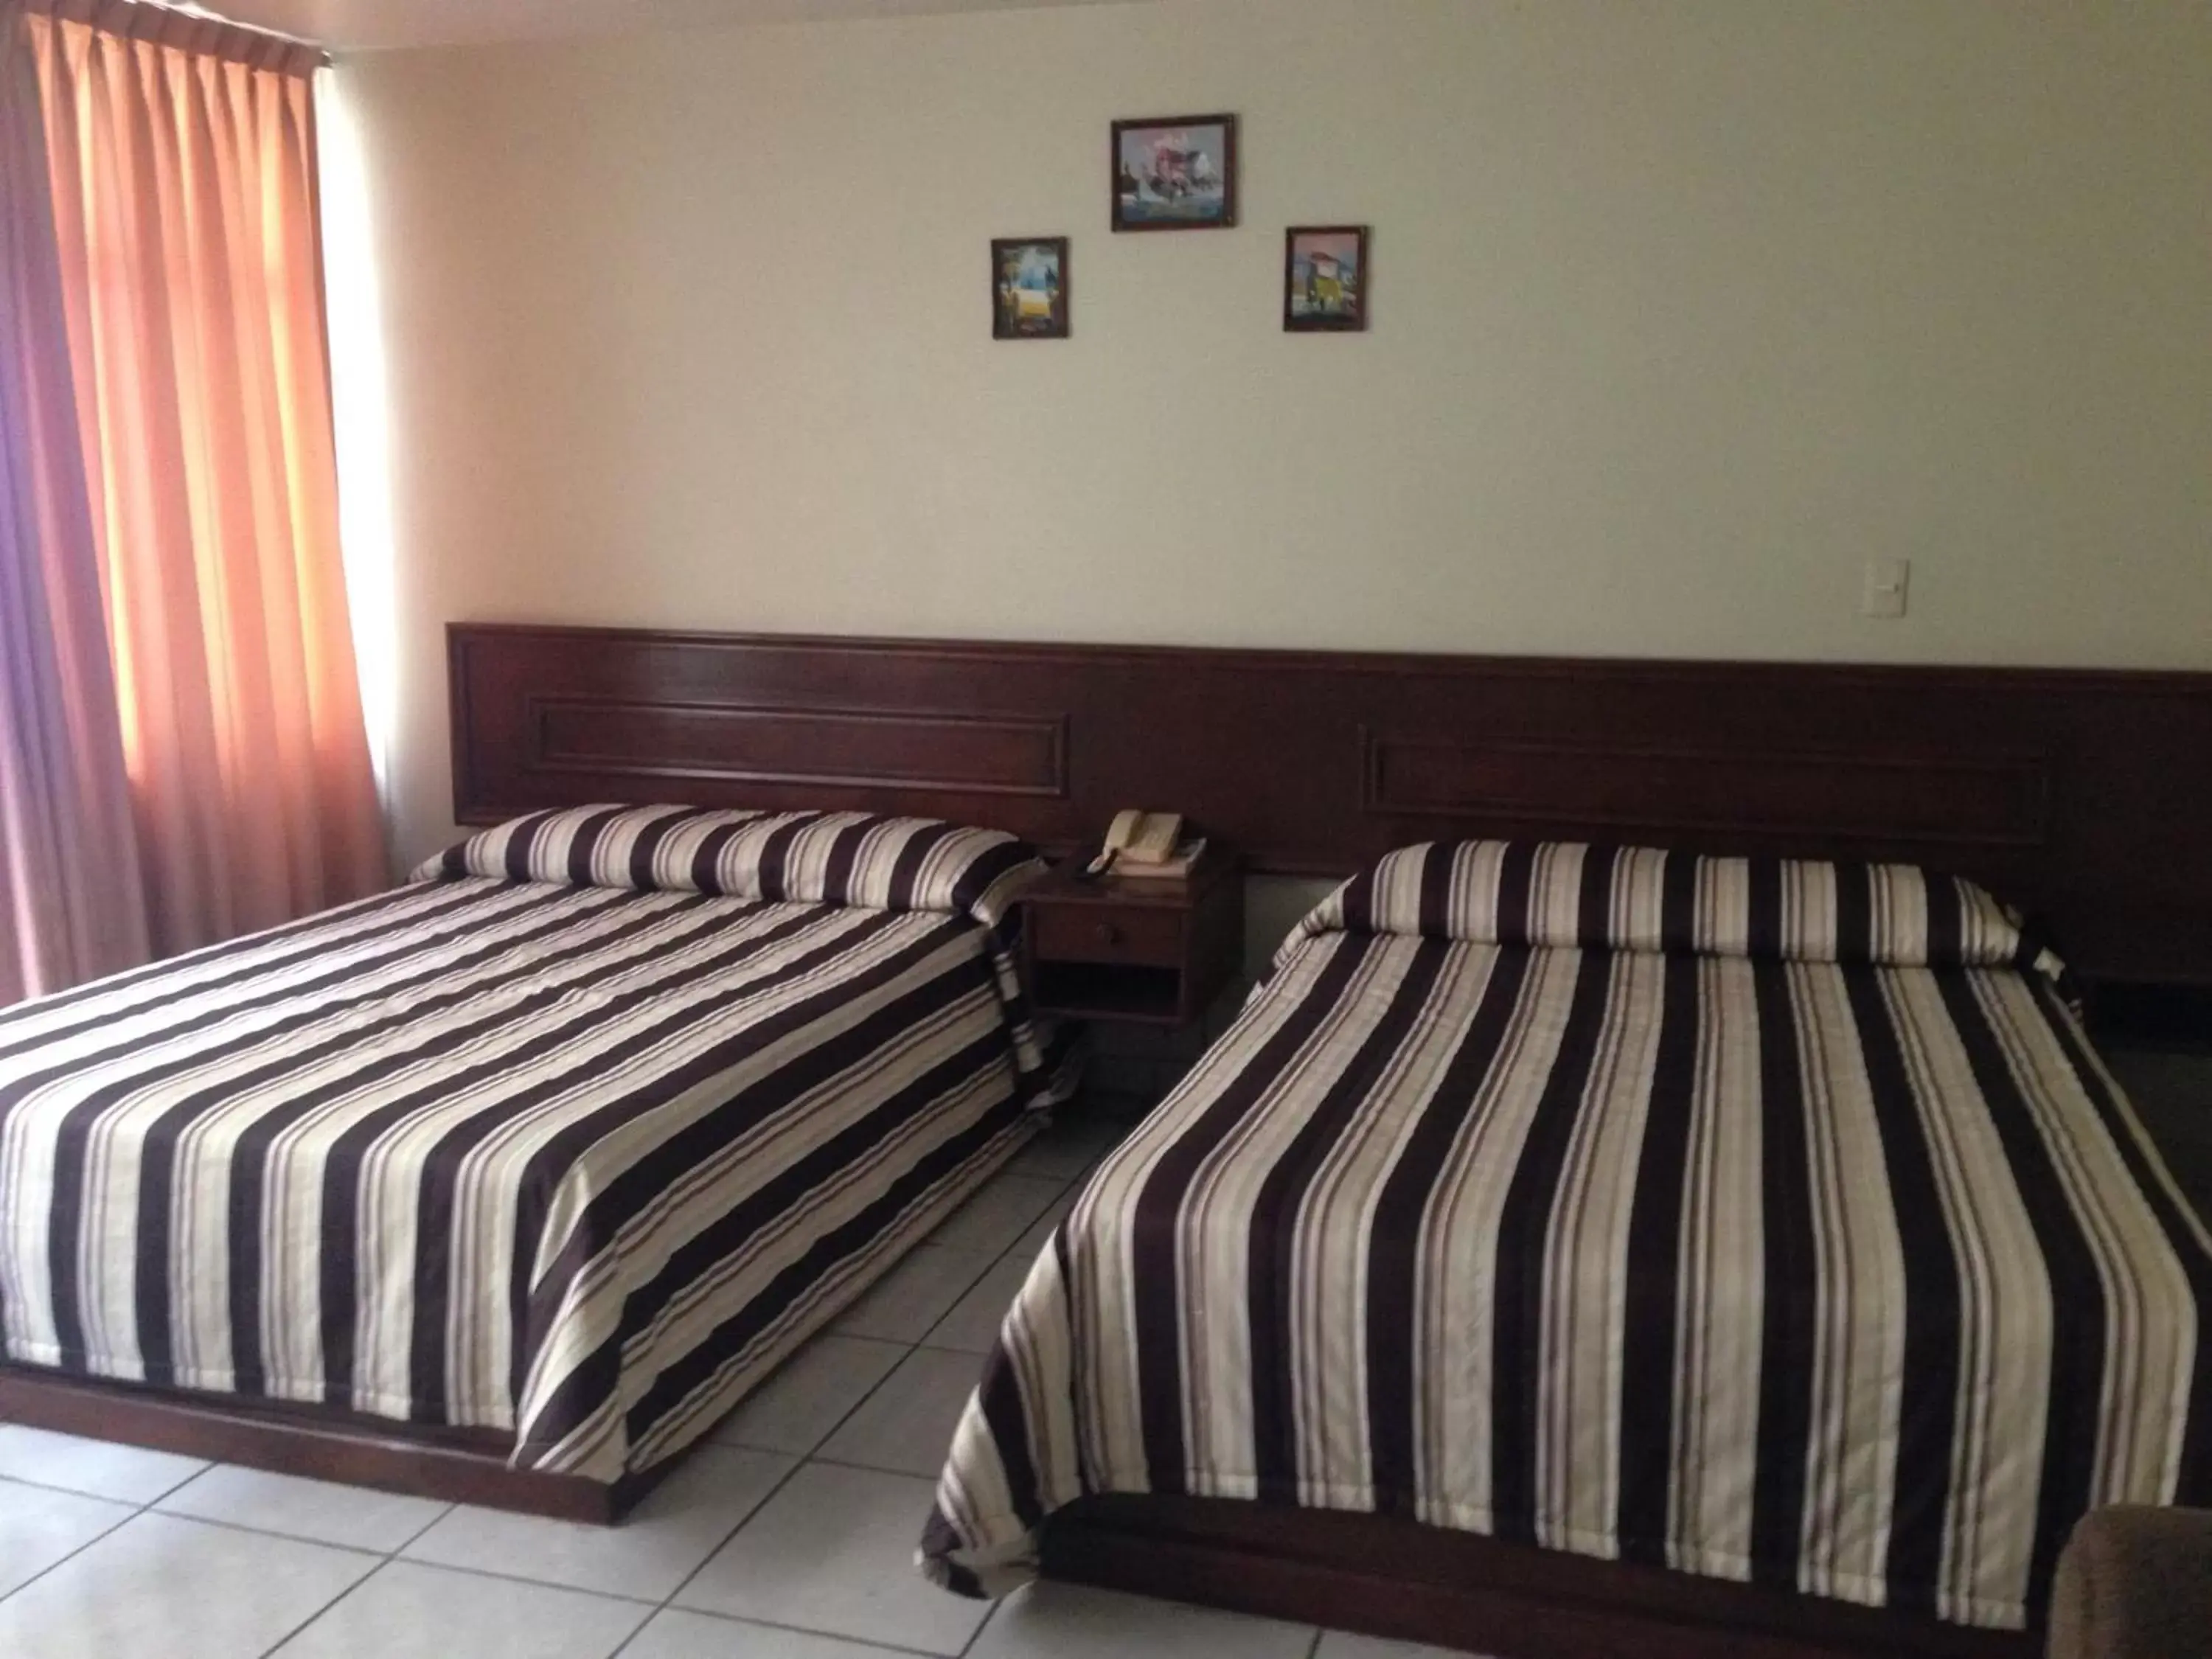 Bed, Room Photo in Hotel Plaza Sahuayo